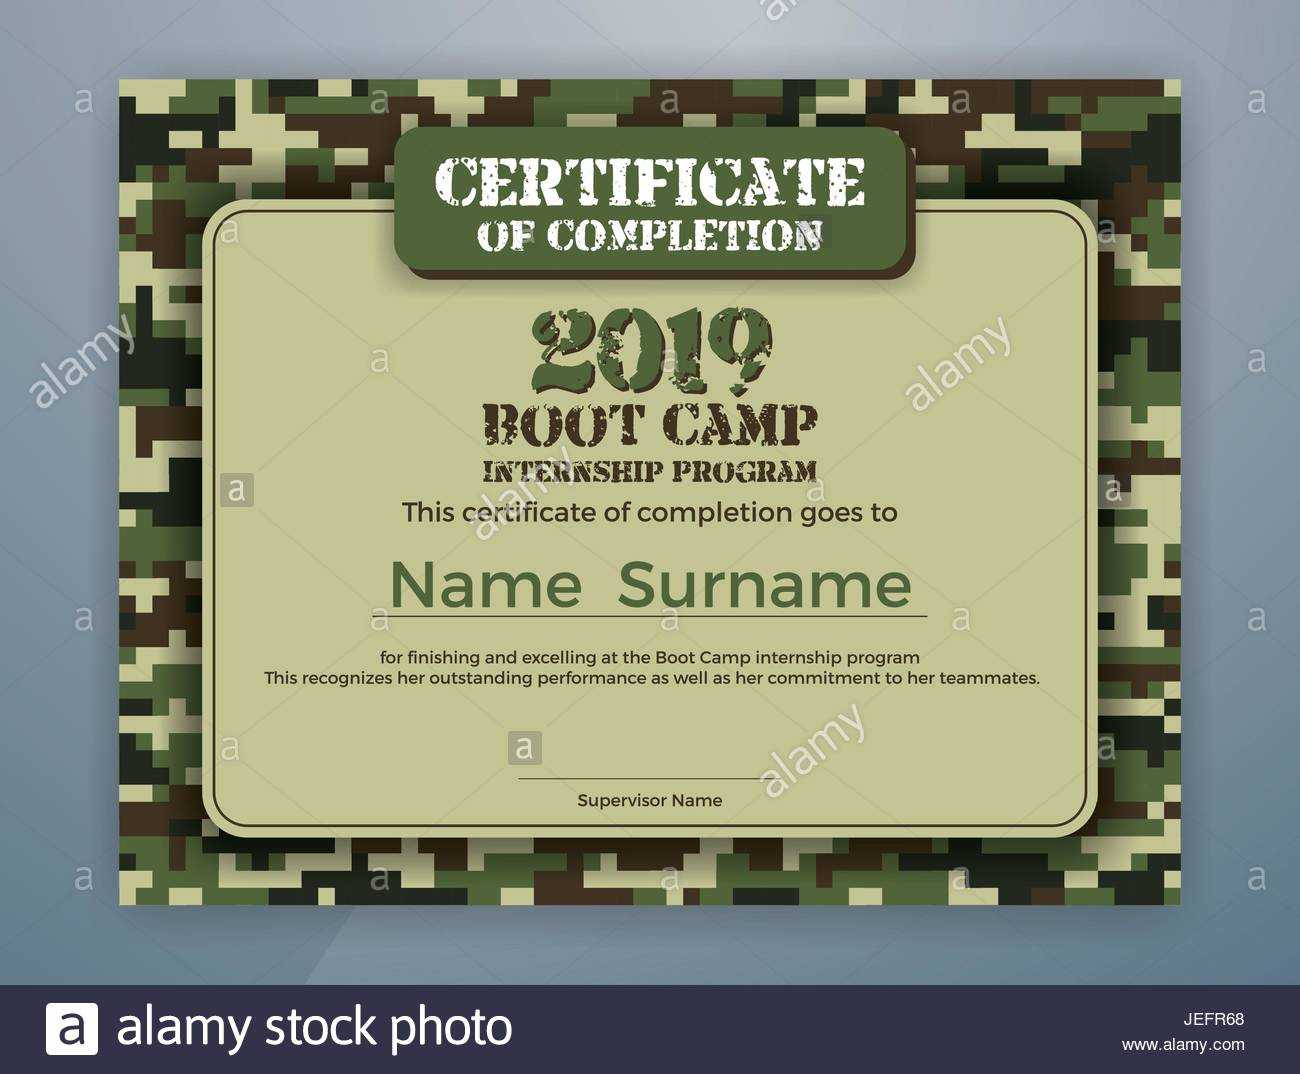 Boot Camp Internship Program Certificate Template Design With Regard To Boot Camp Certificate Template